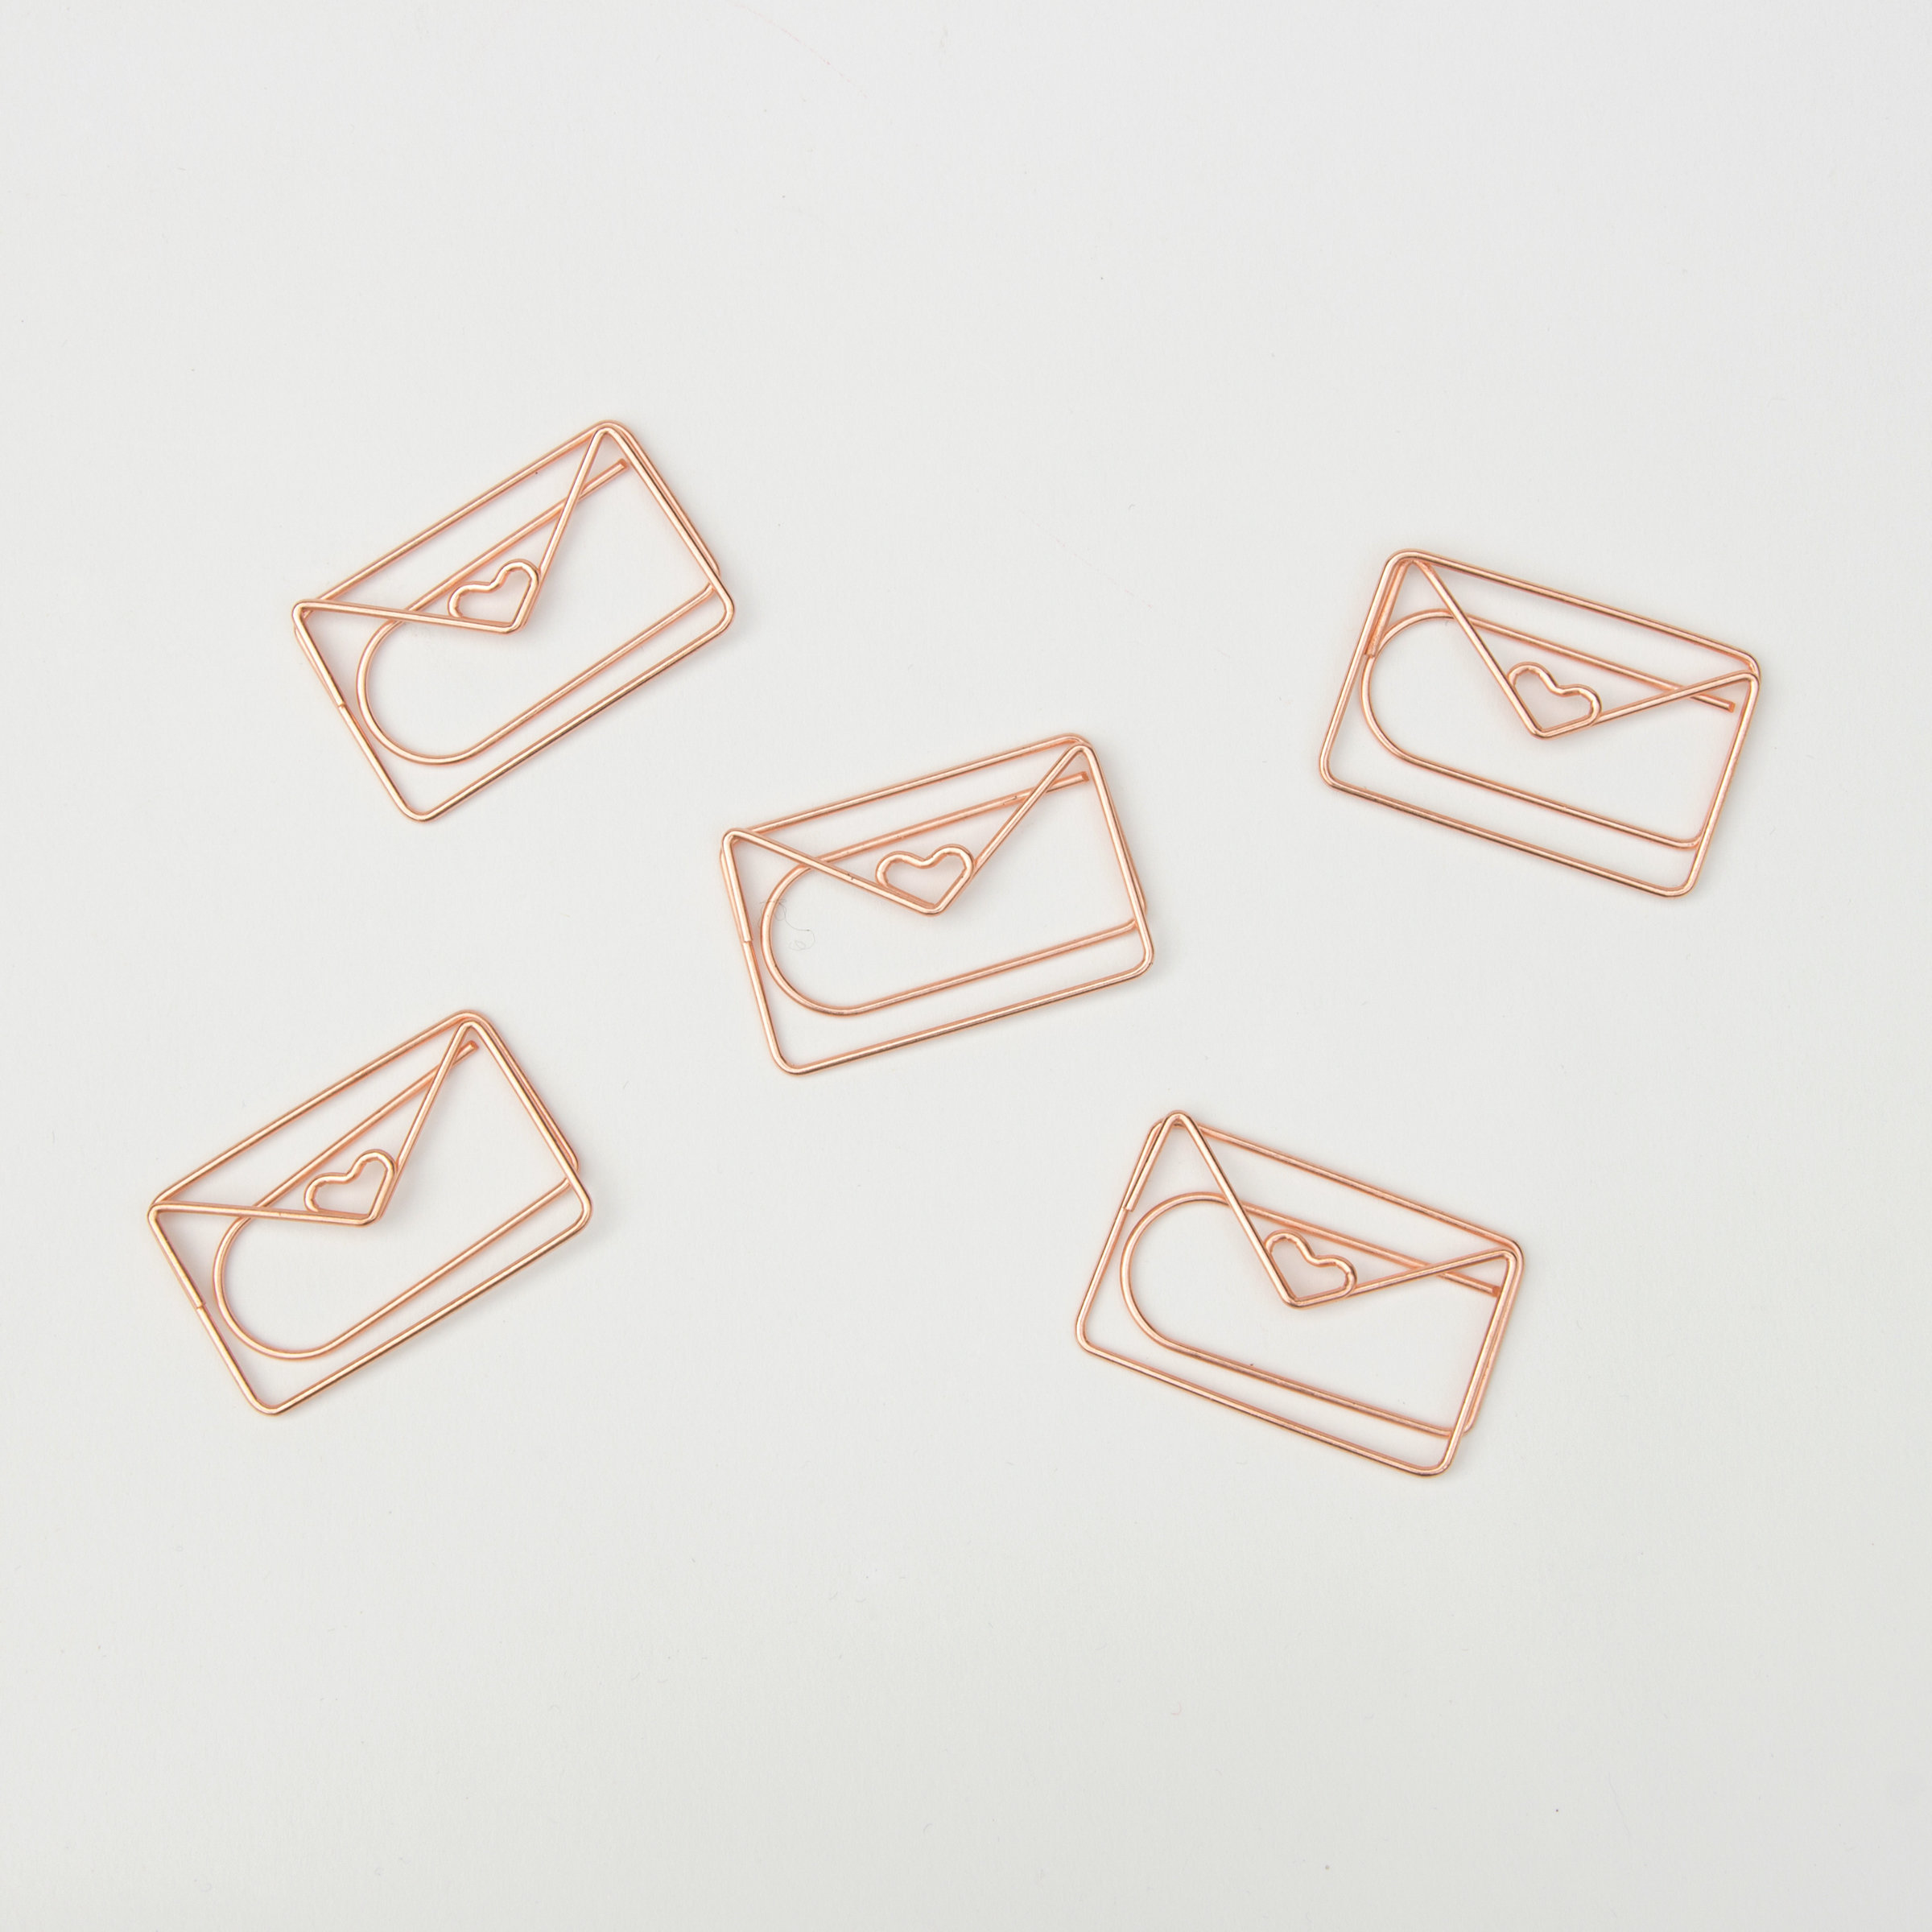 Rose gold envelope shaped paper clips